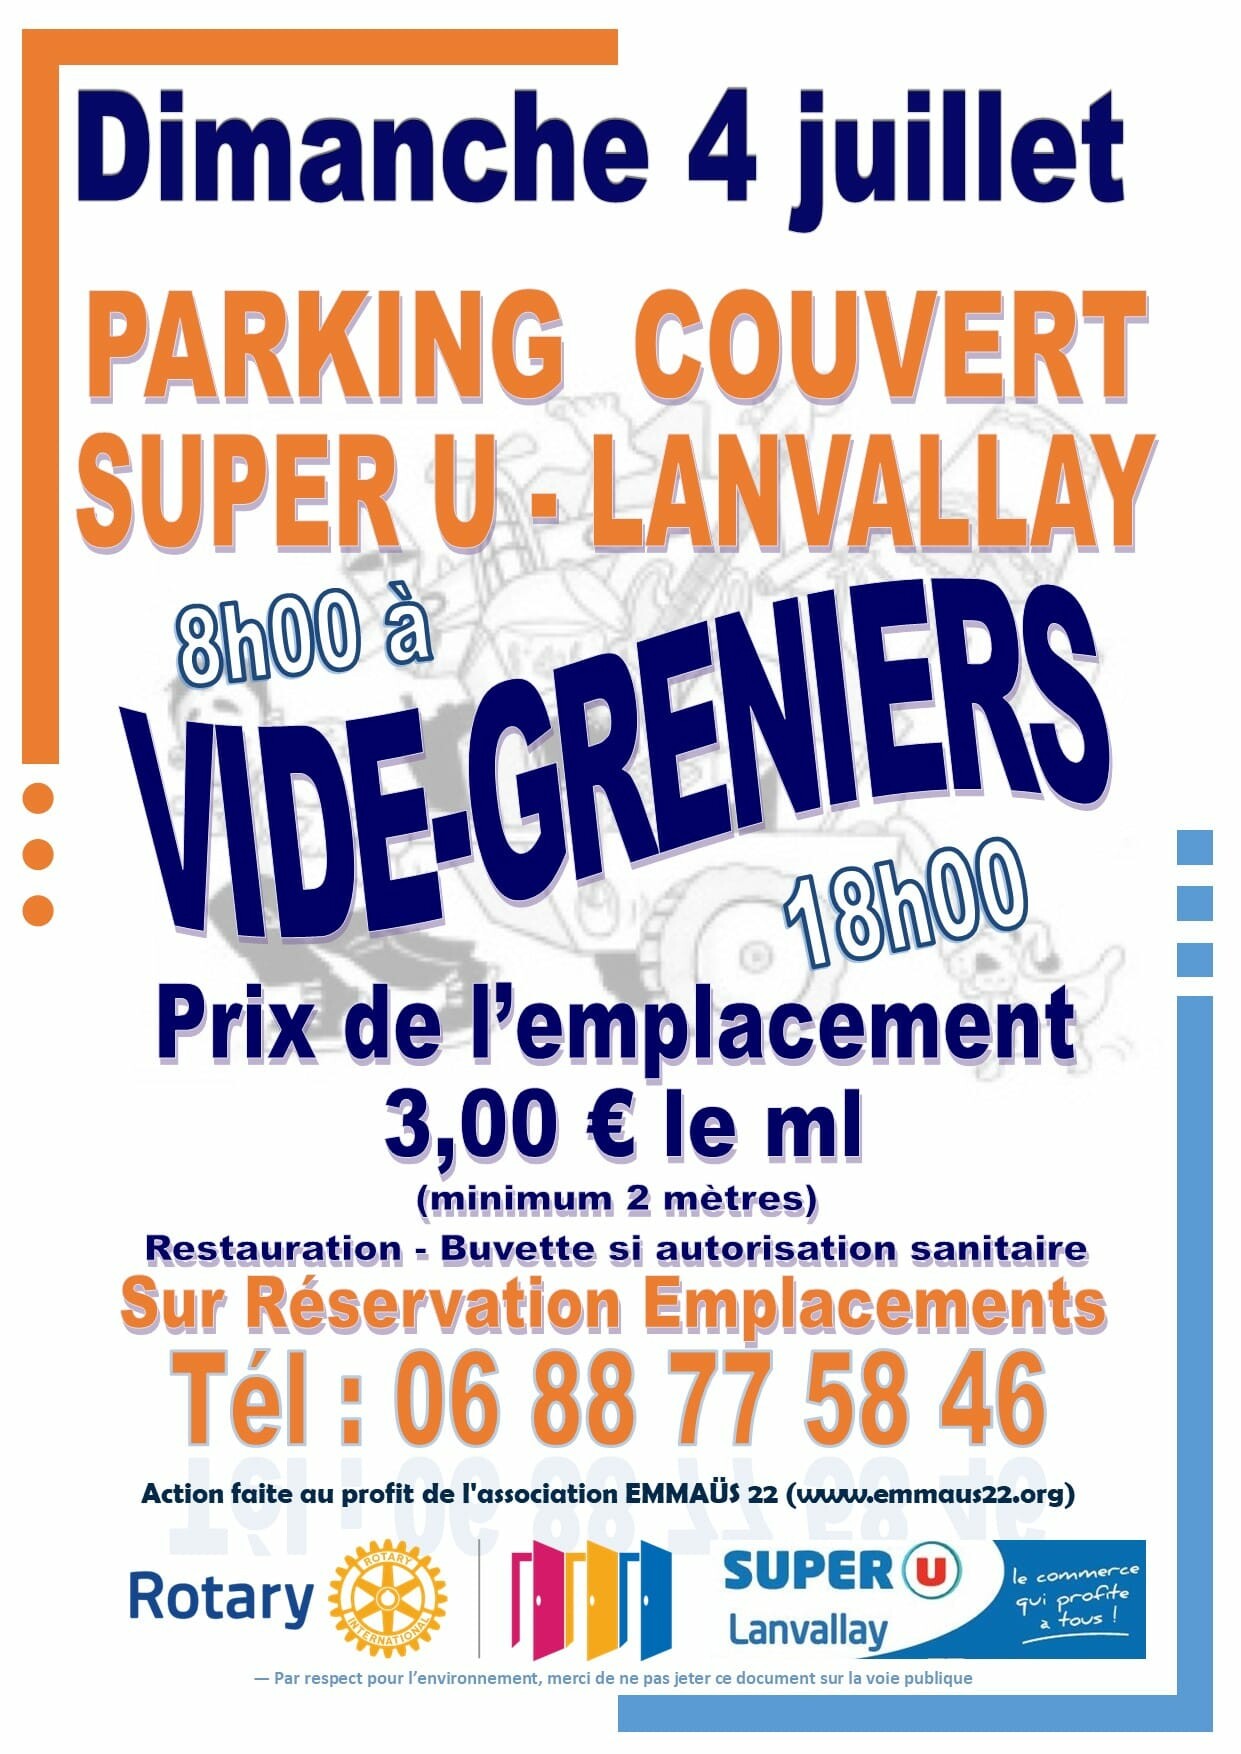 Vide-greniers de Lanvallay